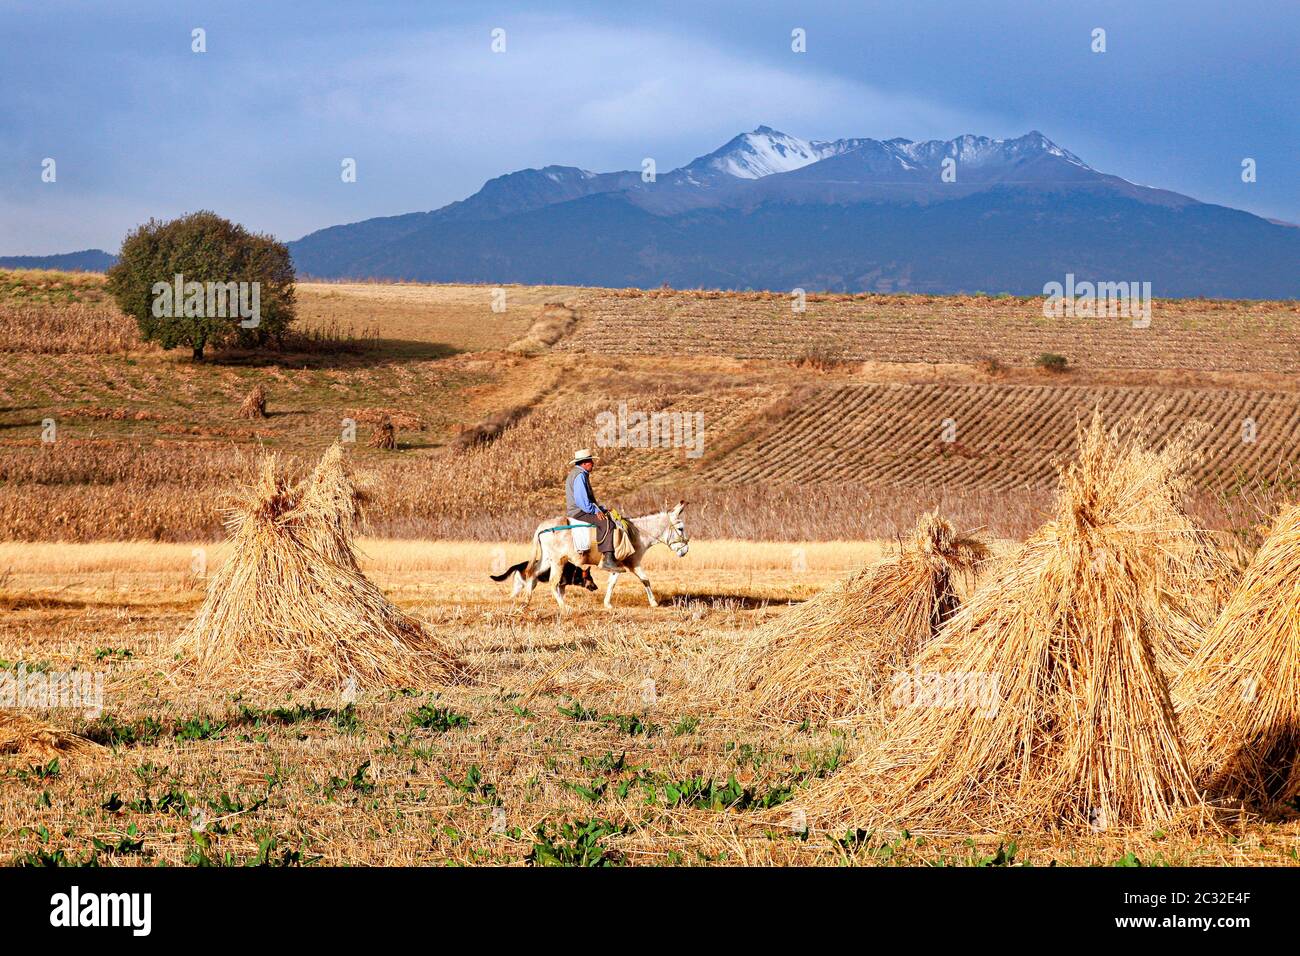 A farmer rides through his fields near the Nevado de Toluca peak near Toluca, Mexico. Stock Photo